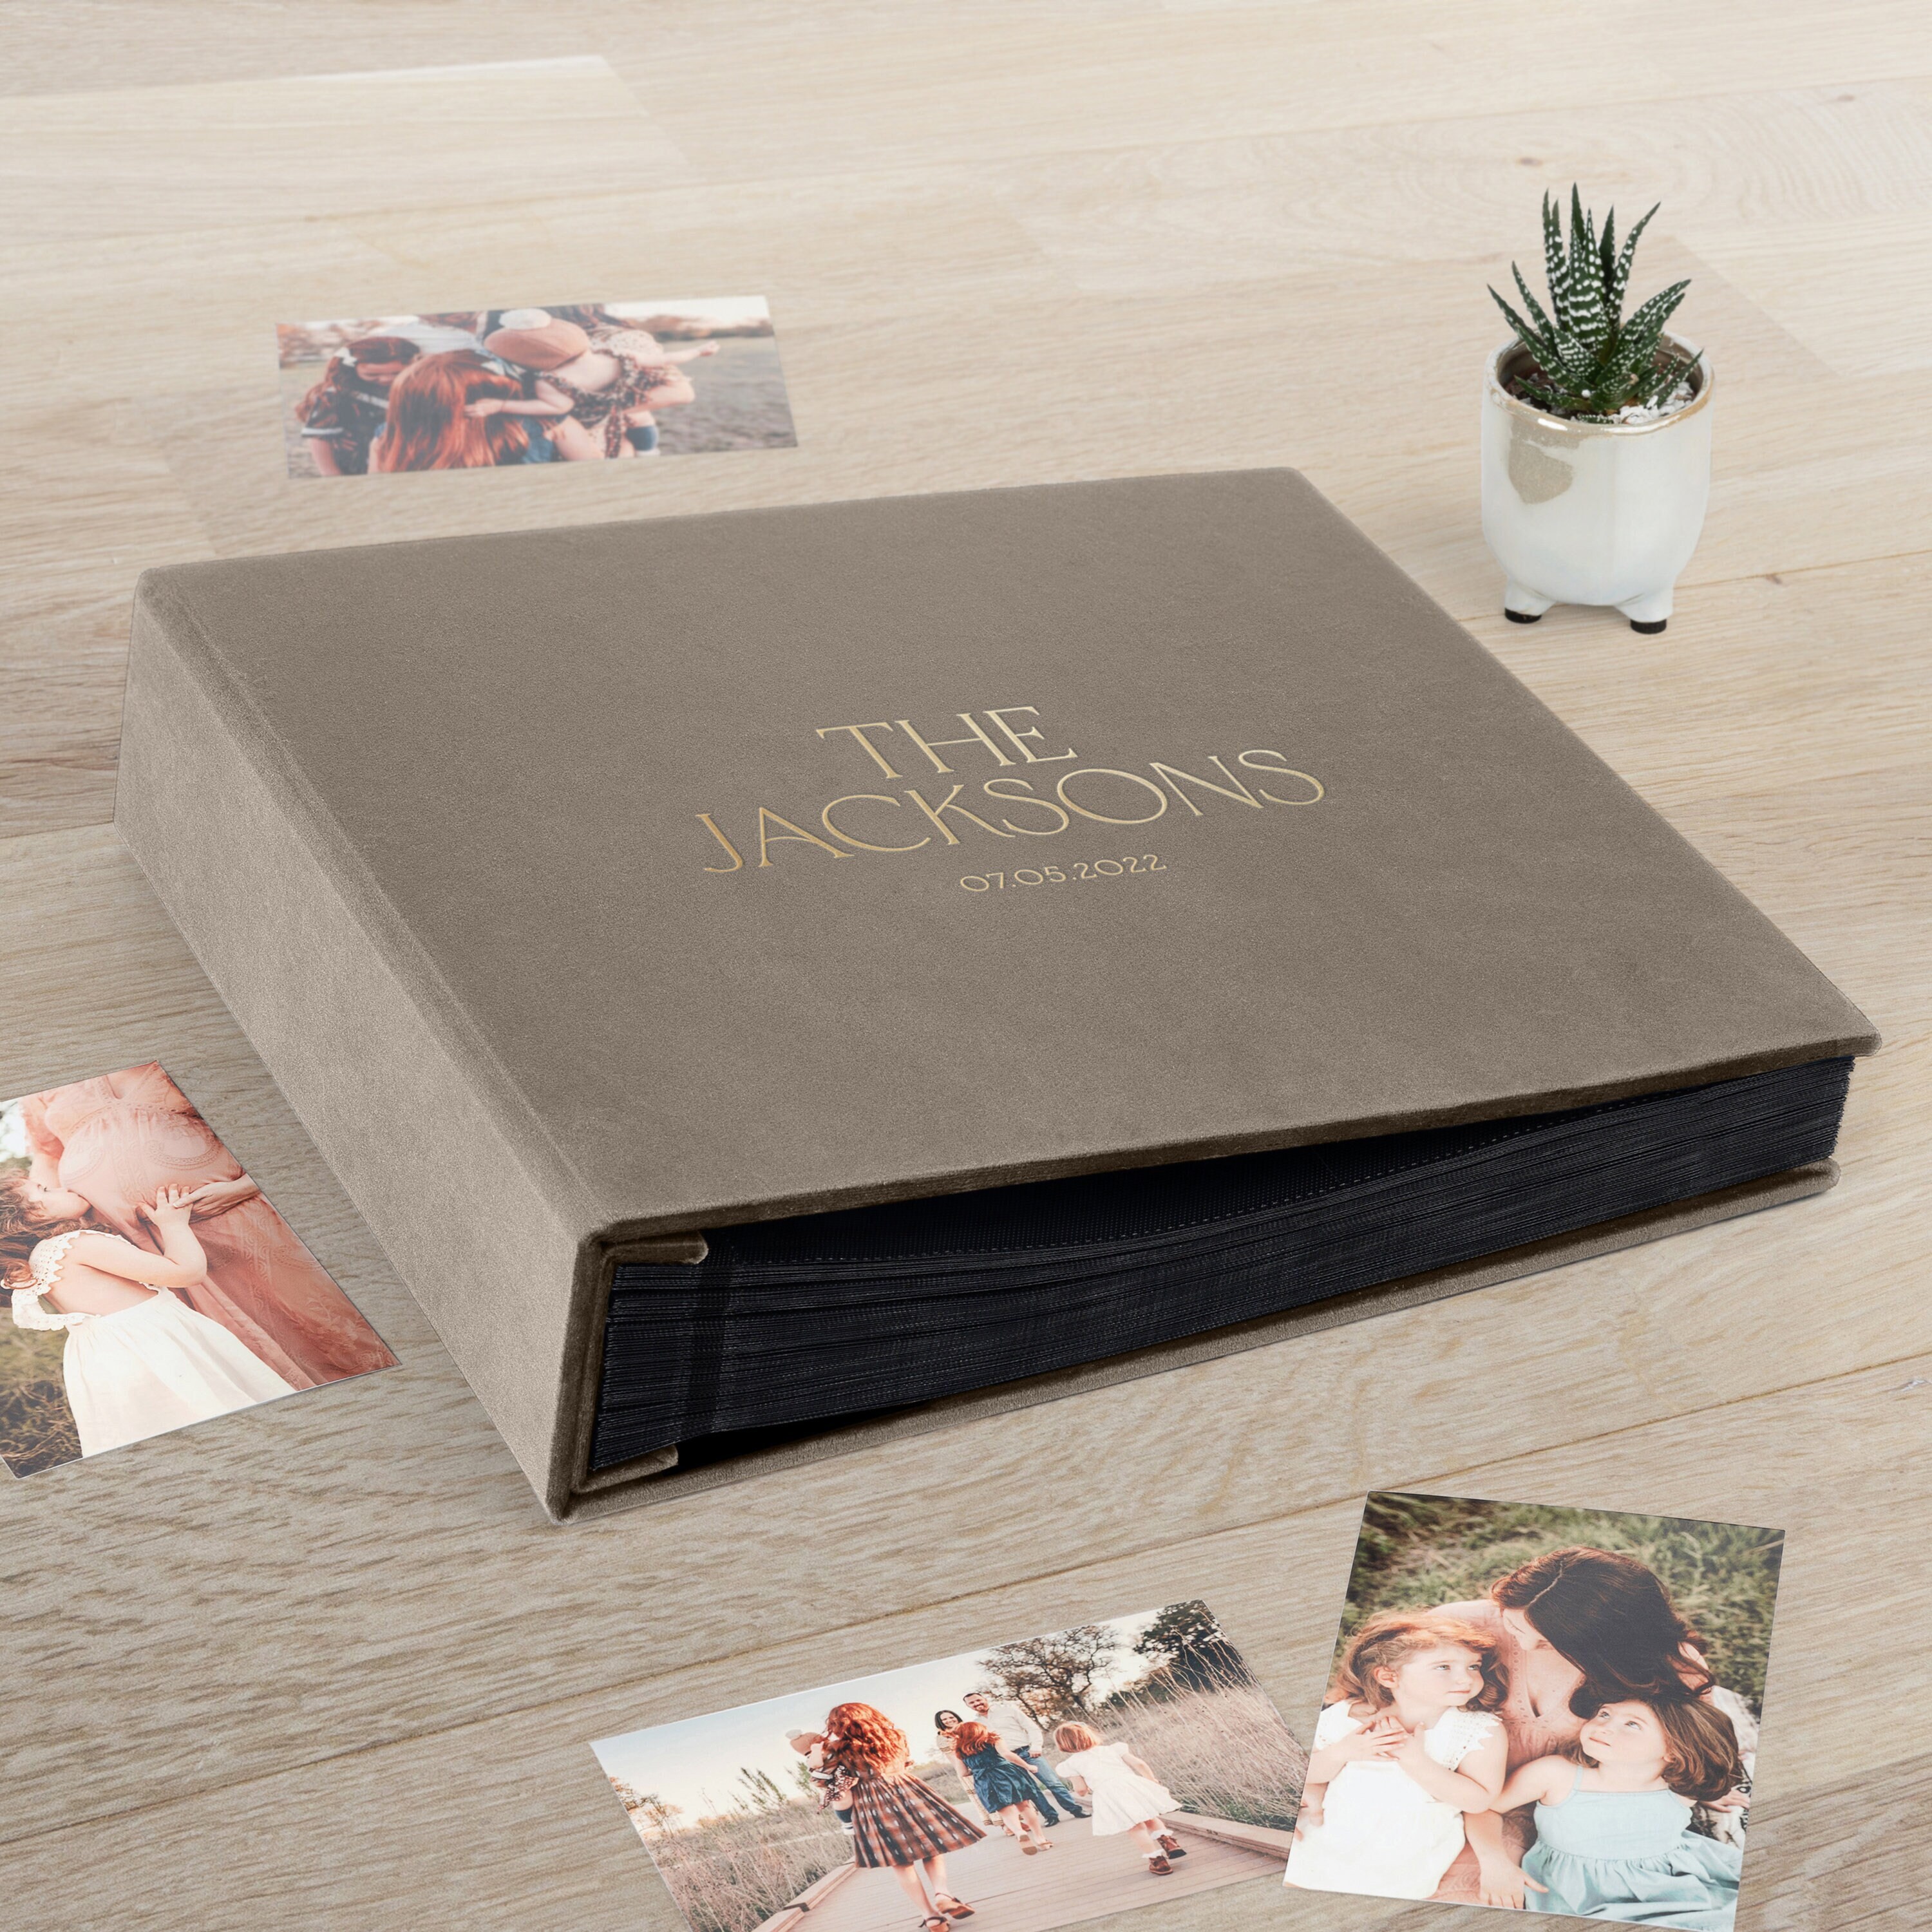 Large Photo Album Self Adhesive Pages - Photo Album Book for 2x3 4x6 5x7 8x8 8x10 8.5x11 Photo, 40 Pages, Linen Cover with Front Window, DIY Photo